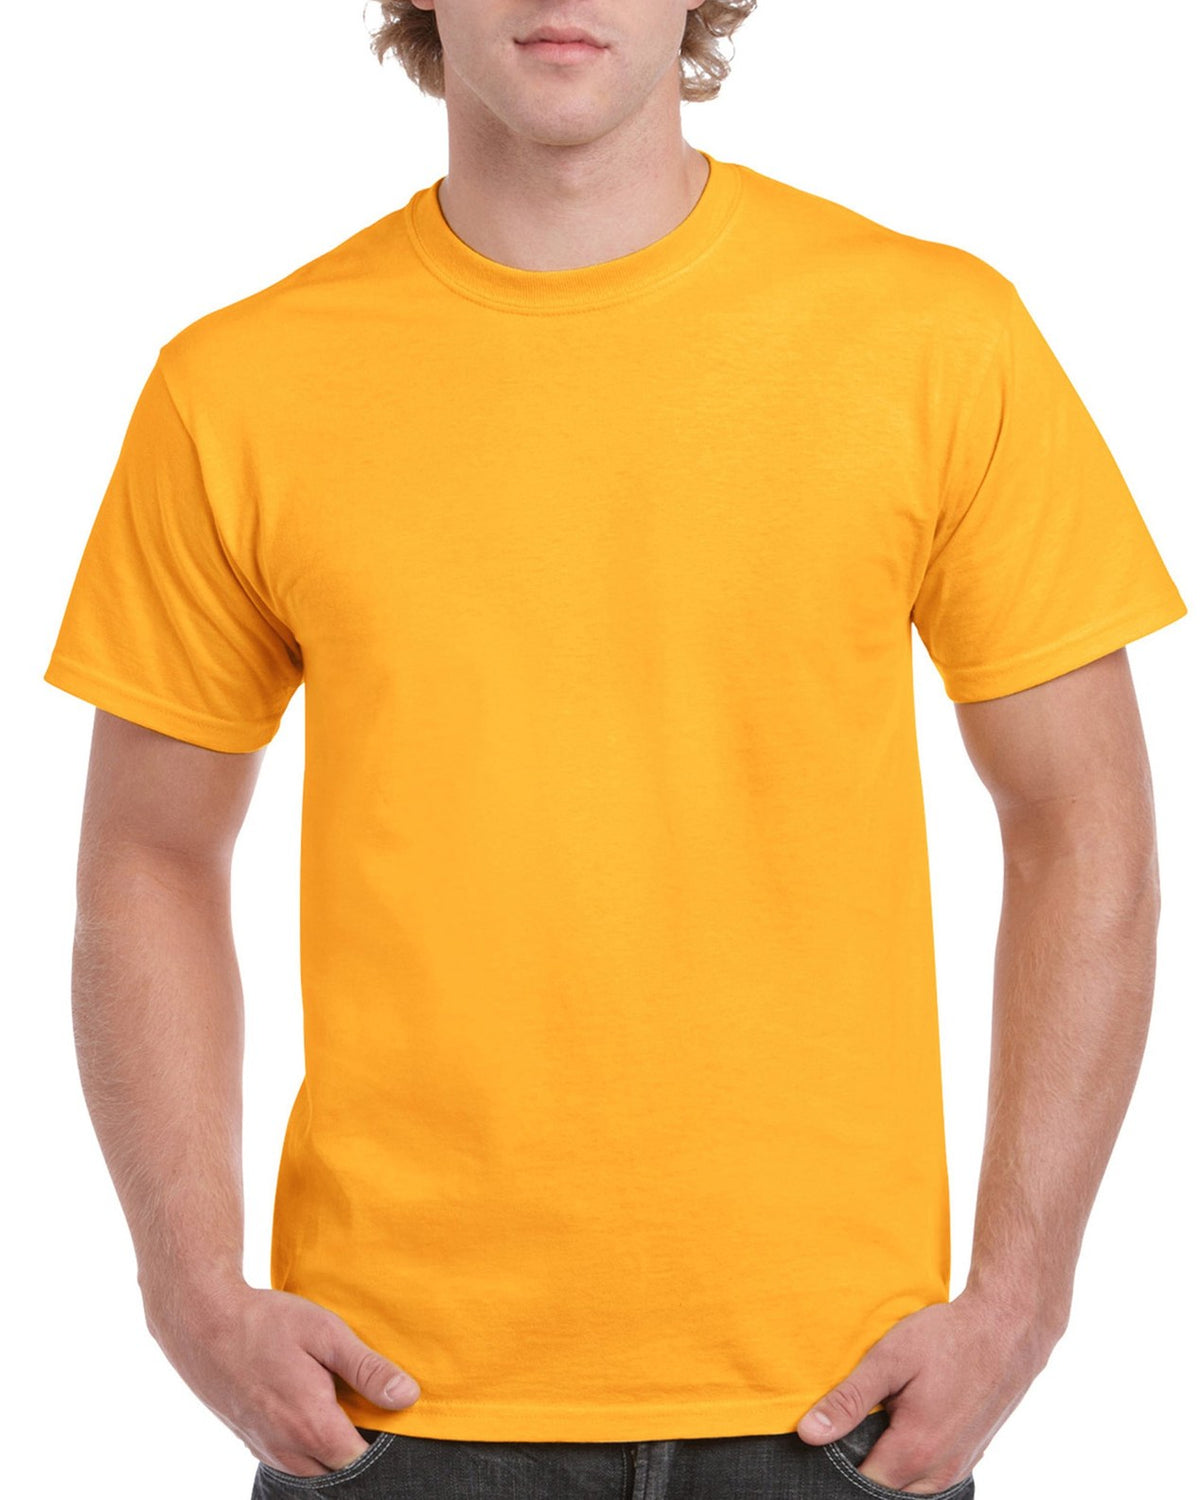 Gildan Heavy Cotton G5000 Adult T-Shirt (S-M-L-XL)